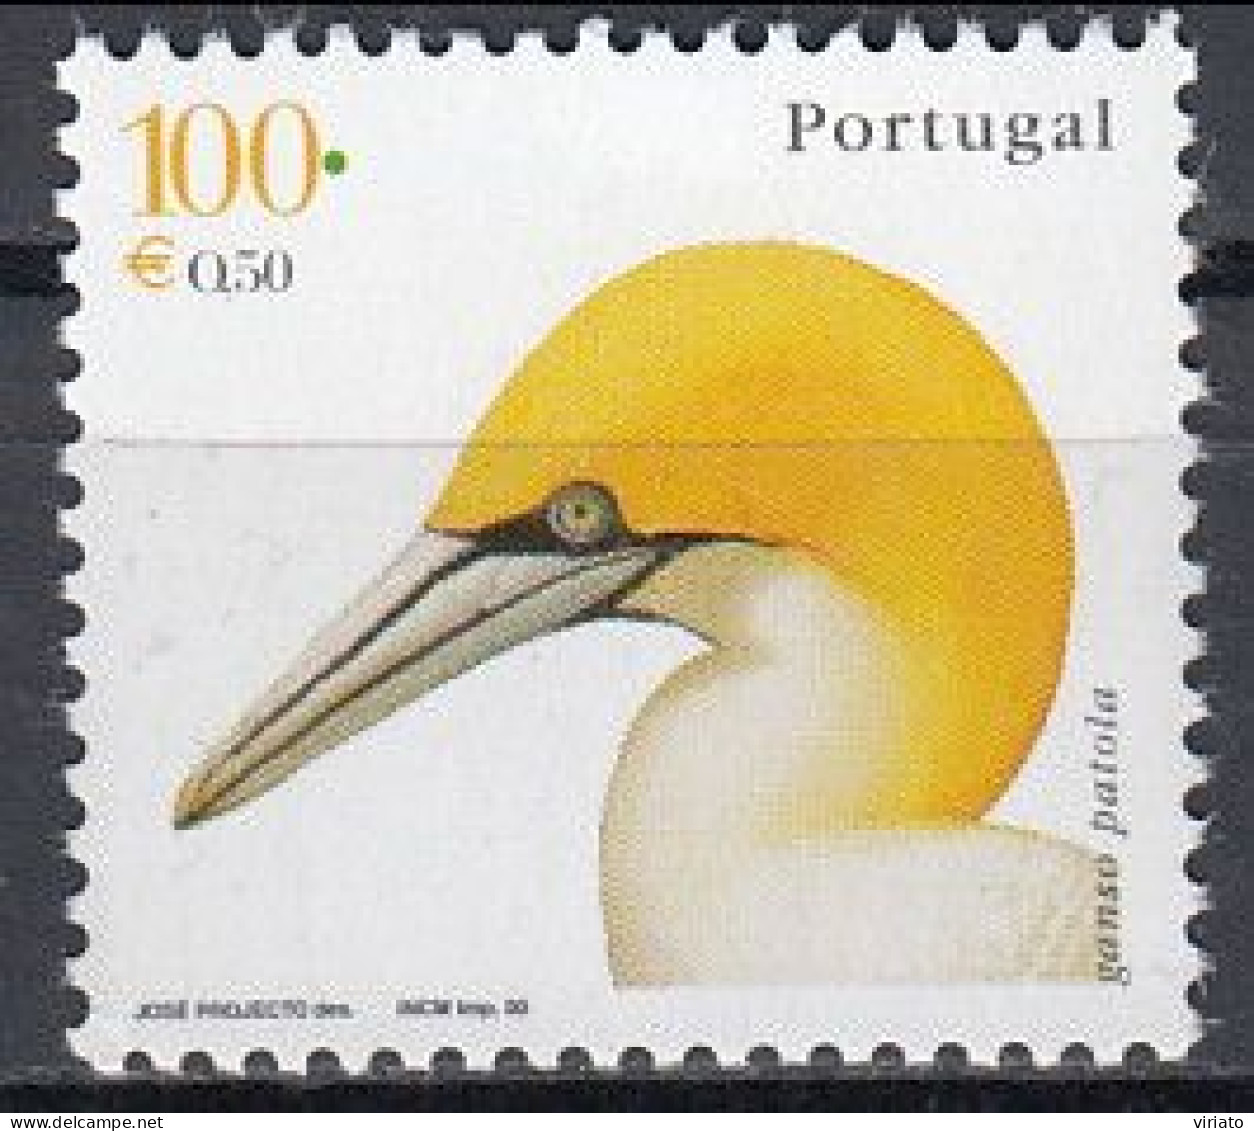 Portugal 2000 (AVE009) (MNH) (Mi 2391) - Northern Gannet (Morus Bassanus) - Marine Web-footed Birds